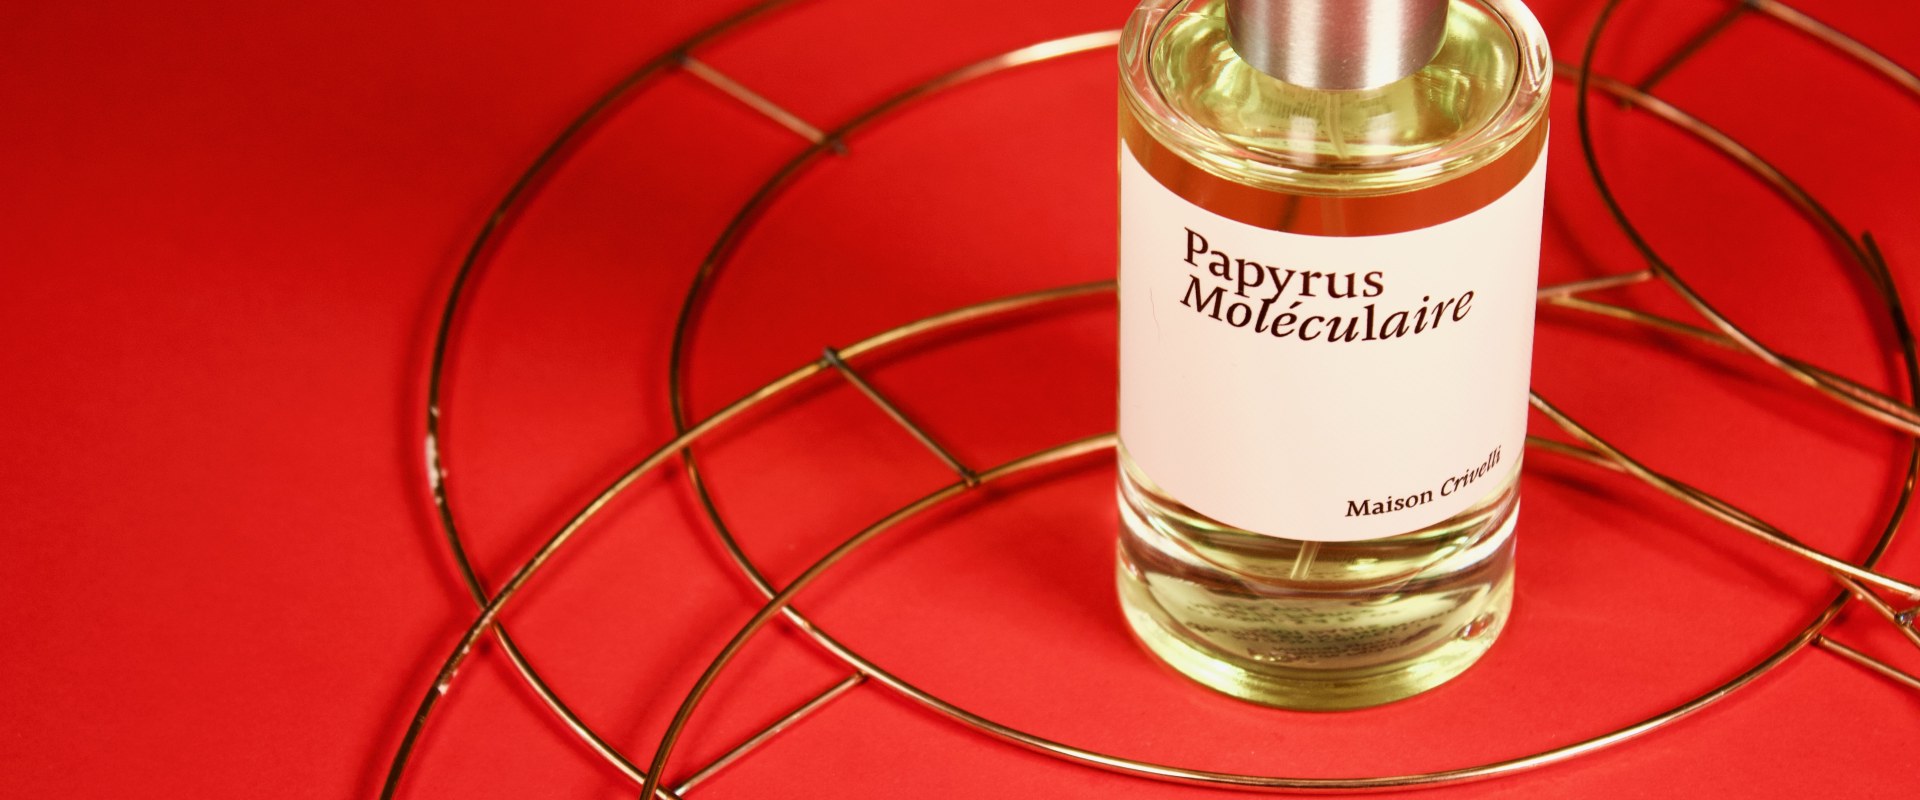 Ambre Nue Review: A Comprehensive Look at a Popular Niche Fragrance